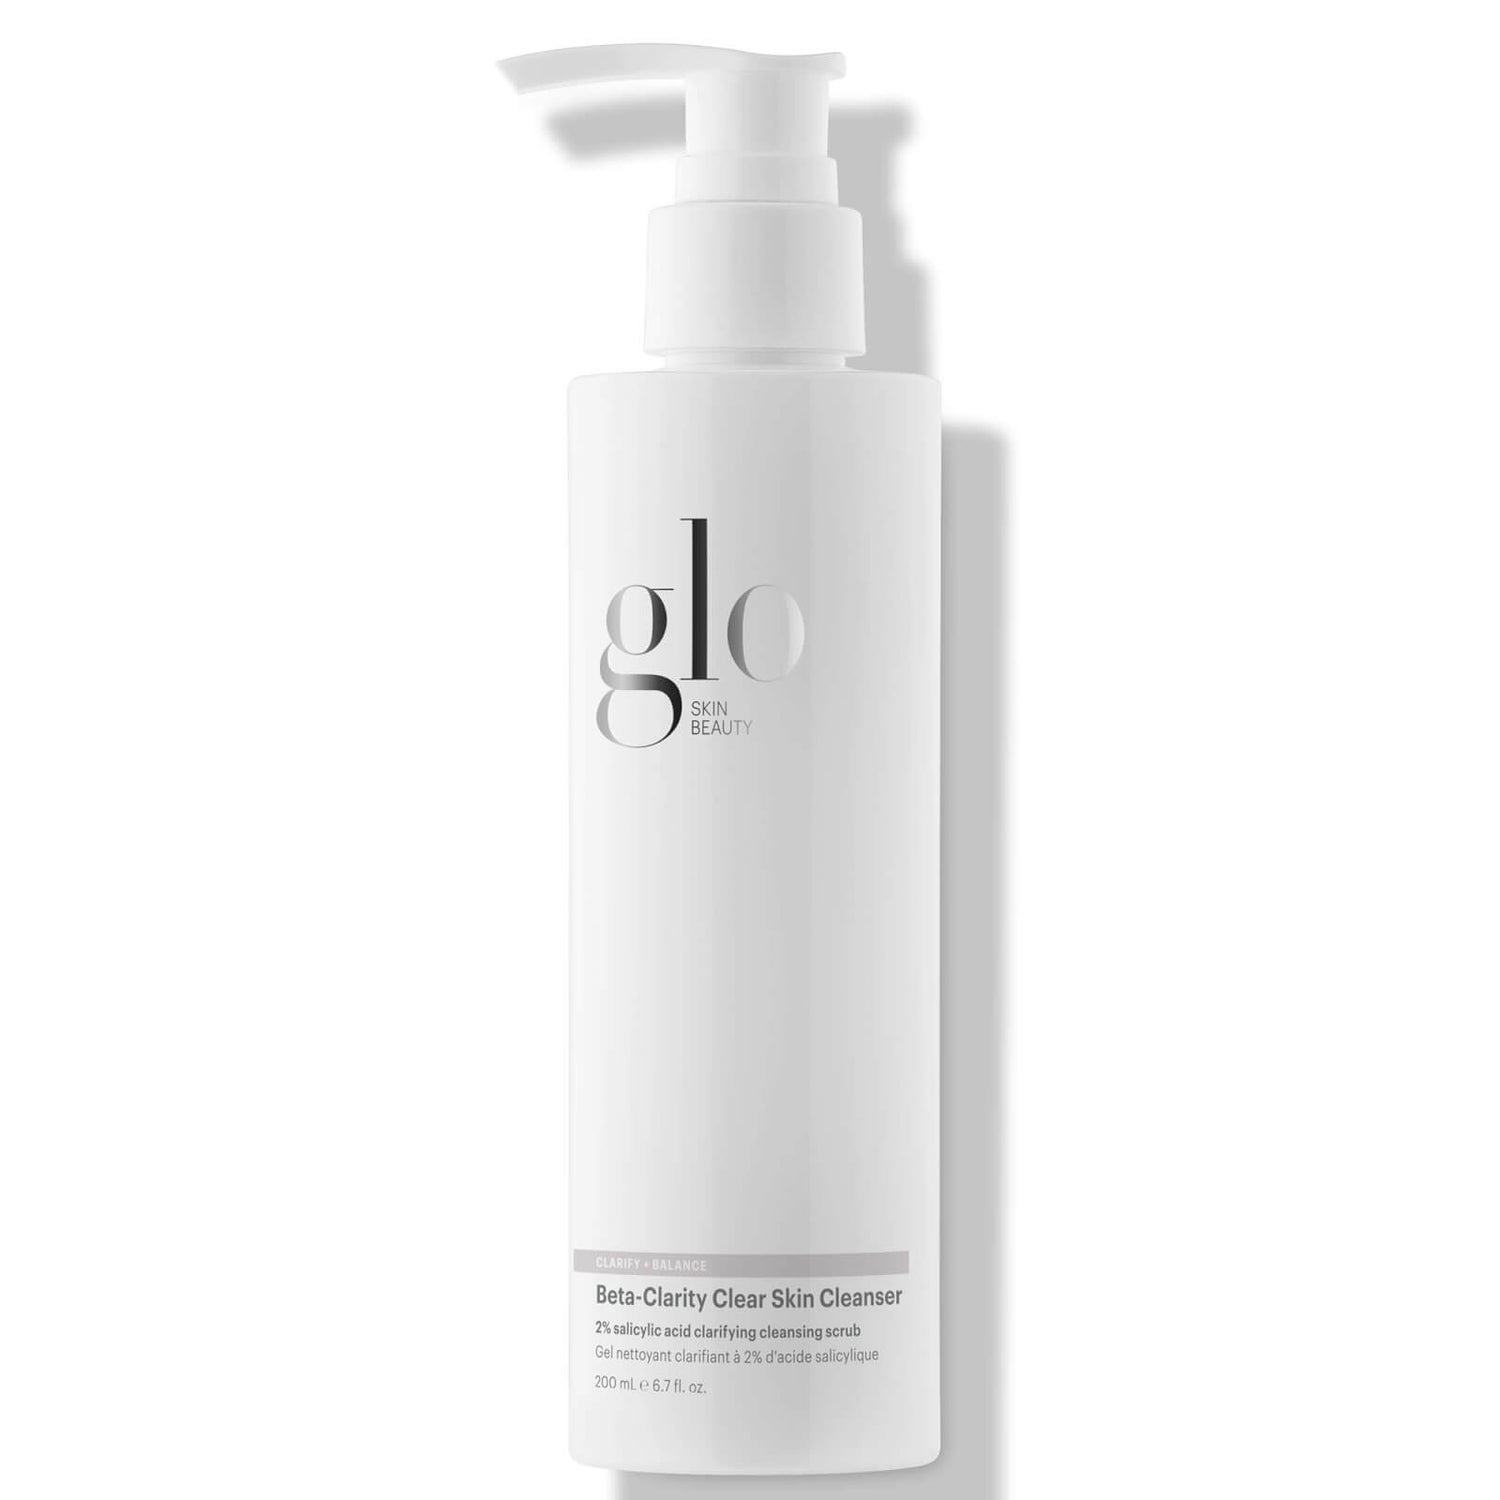 Glo Skin Beauty Beta-Clarity Clear Skin Cleanser 6.09 fl.oz